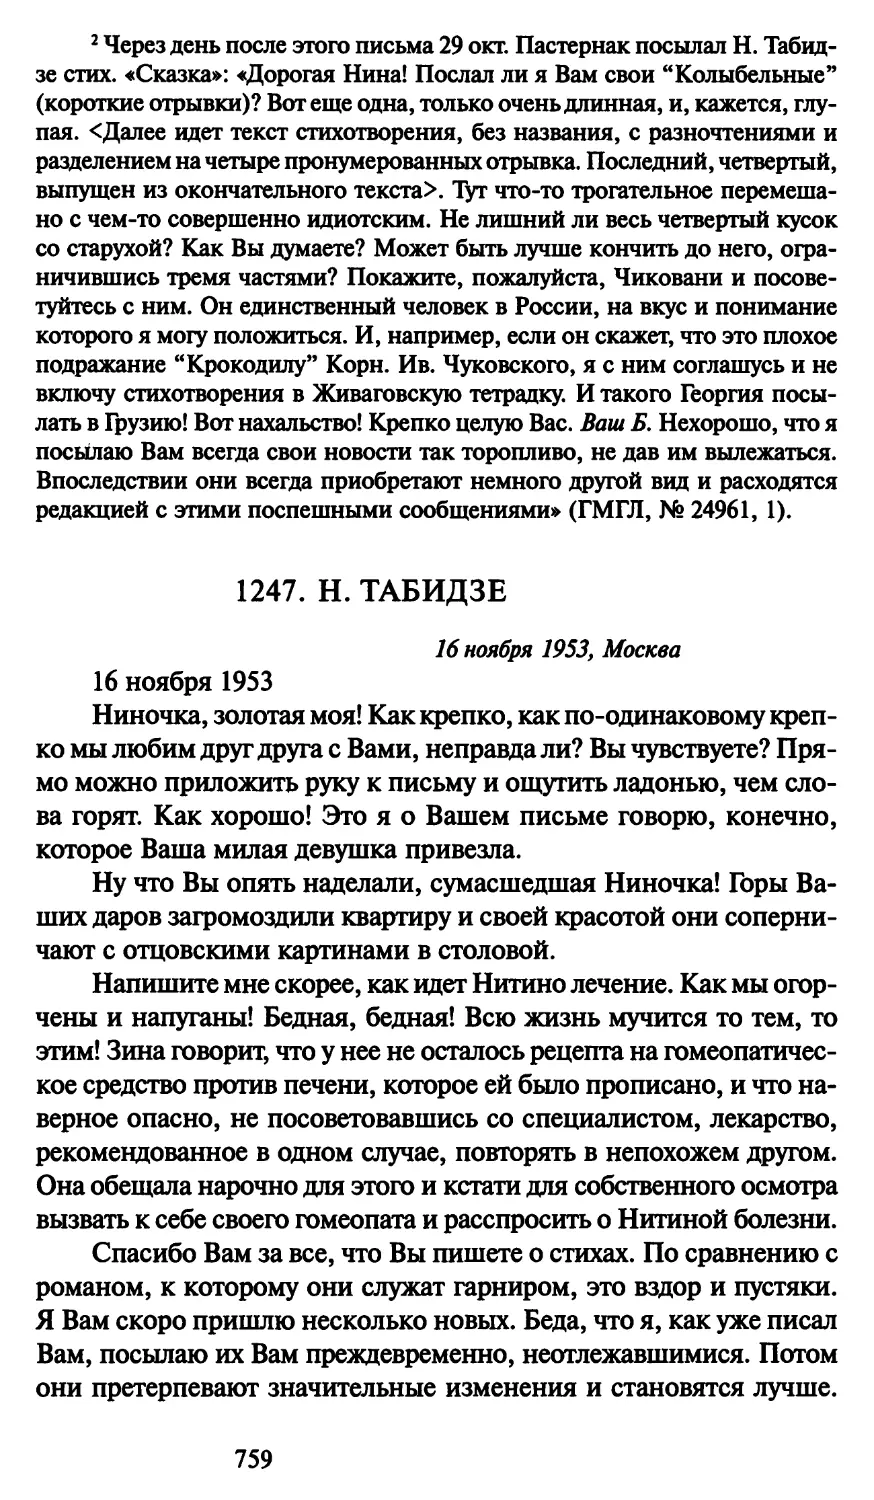 1247. Н. Табидзе 16 ноября 1953